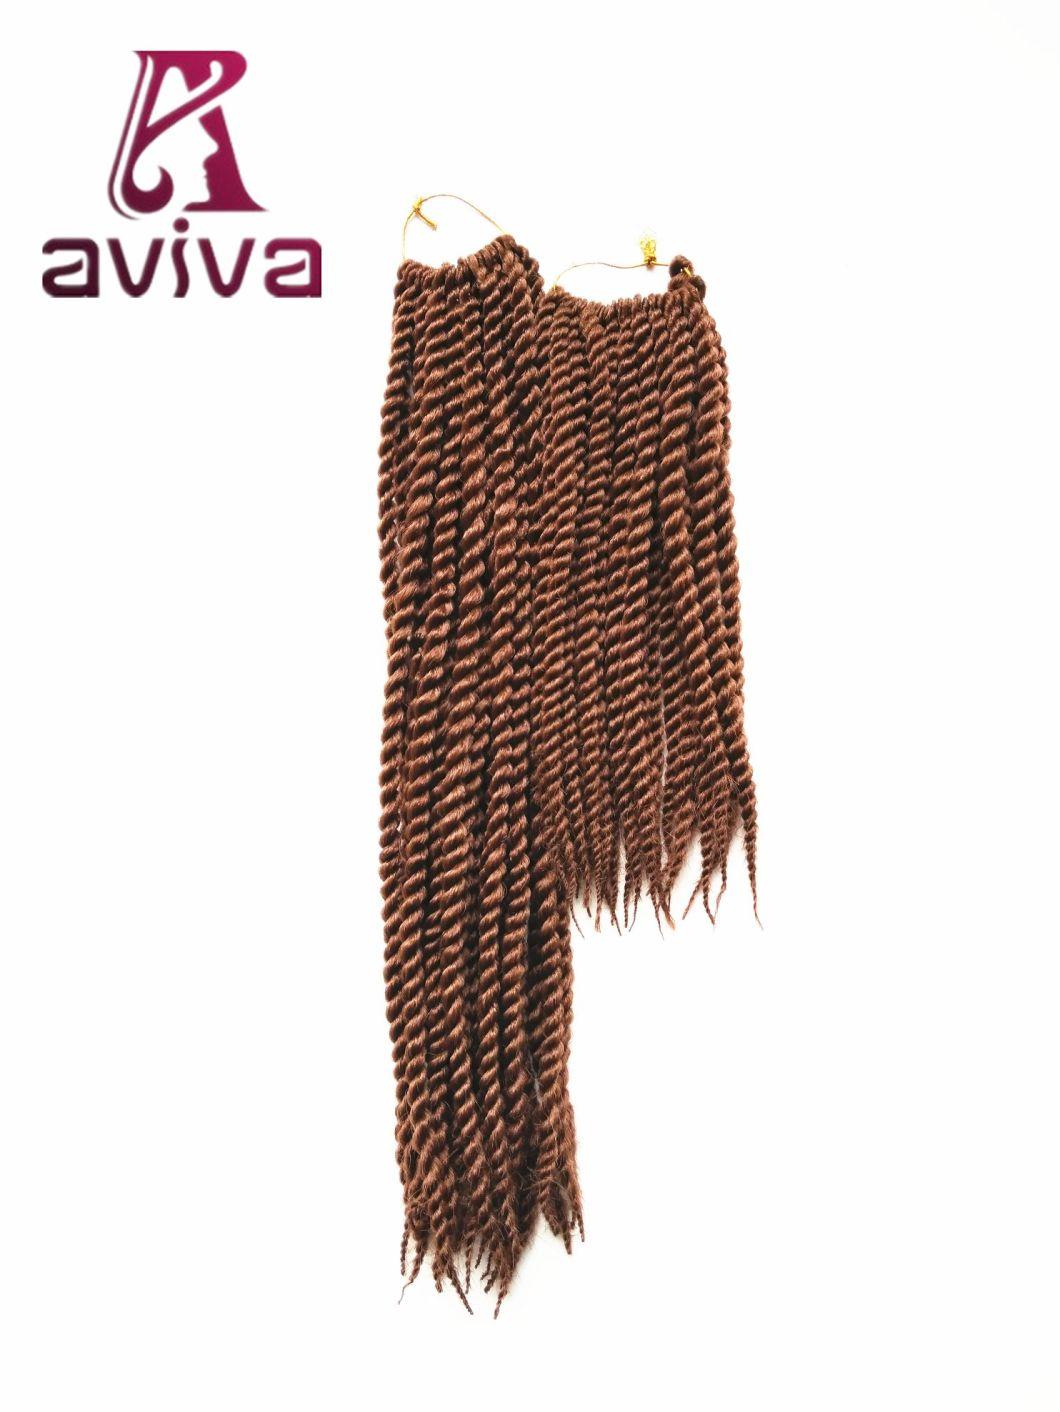 22 Strands/Piece Synthetic Hair Kanekalon Twist Braiding Hair Extensions 12" #4 Flame Resistant Crochet Hair Braids